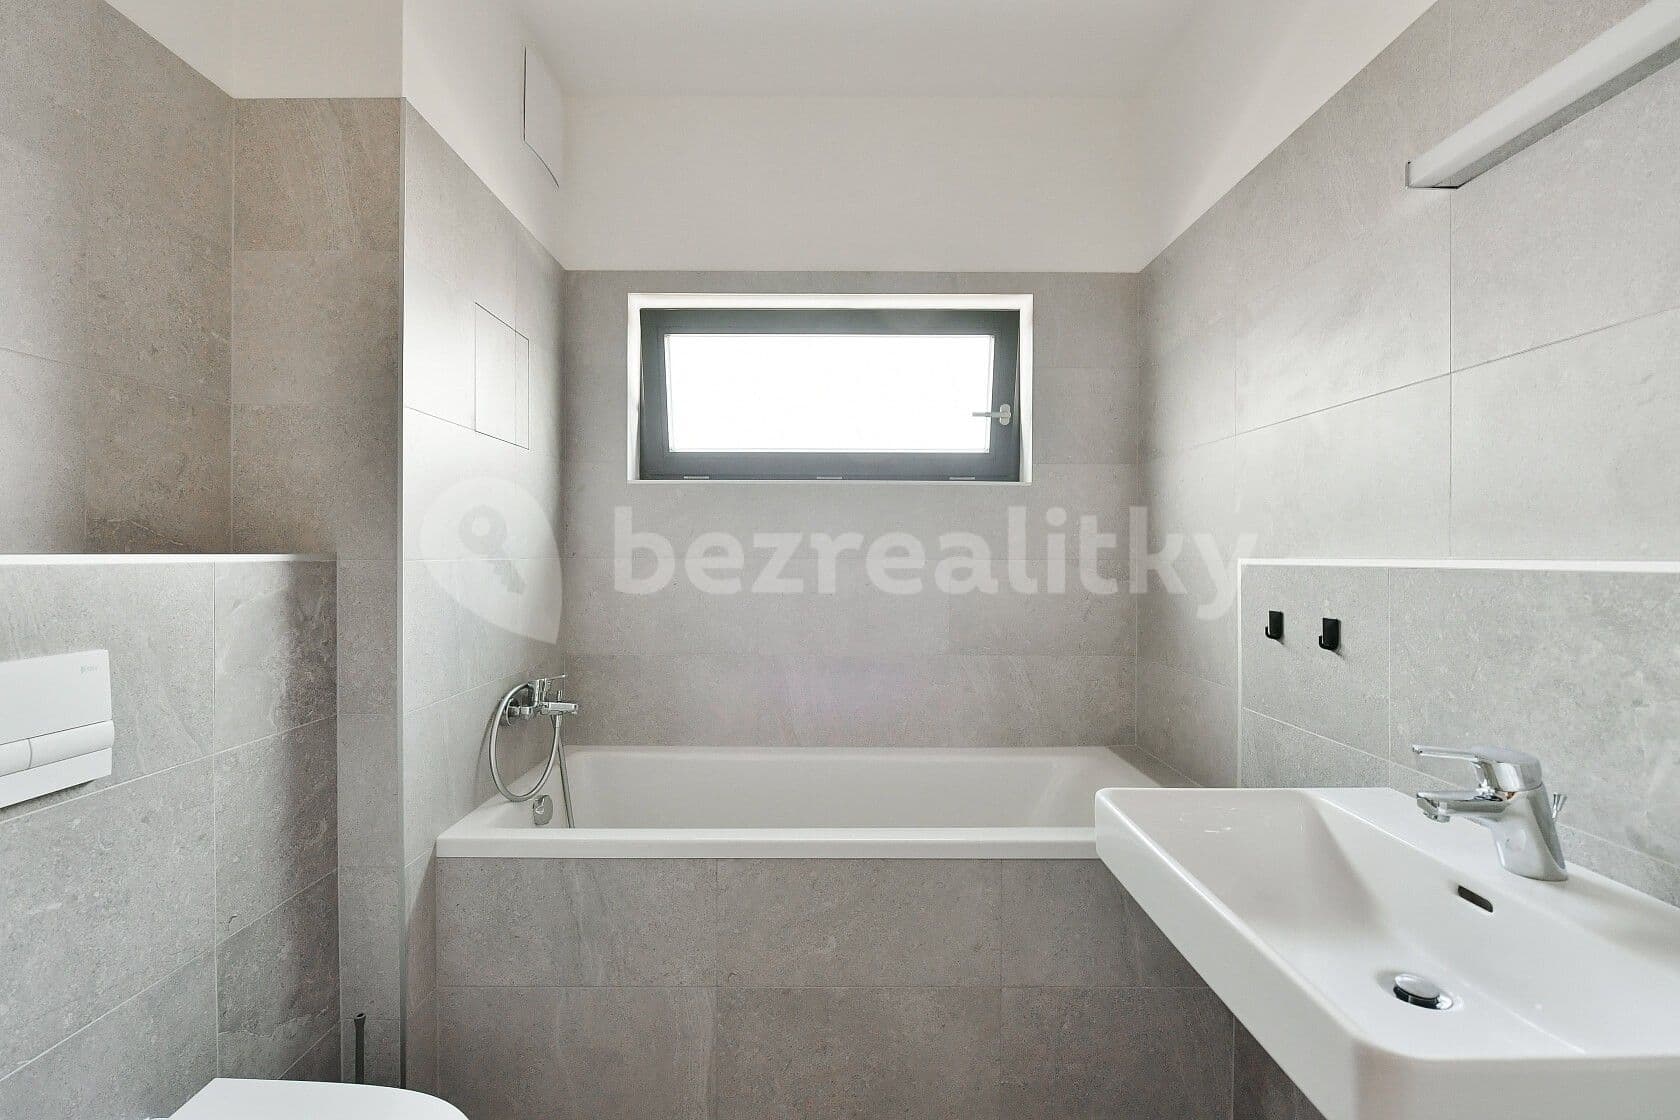 1 bedroom with open-plan kitchen flat to rent, 77 m², Hrašeho, Prague, Prague